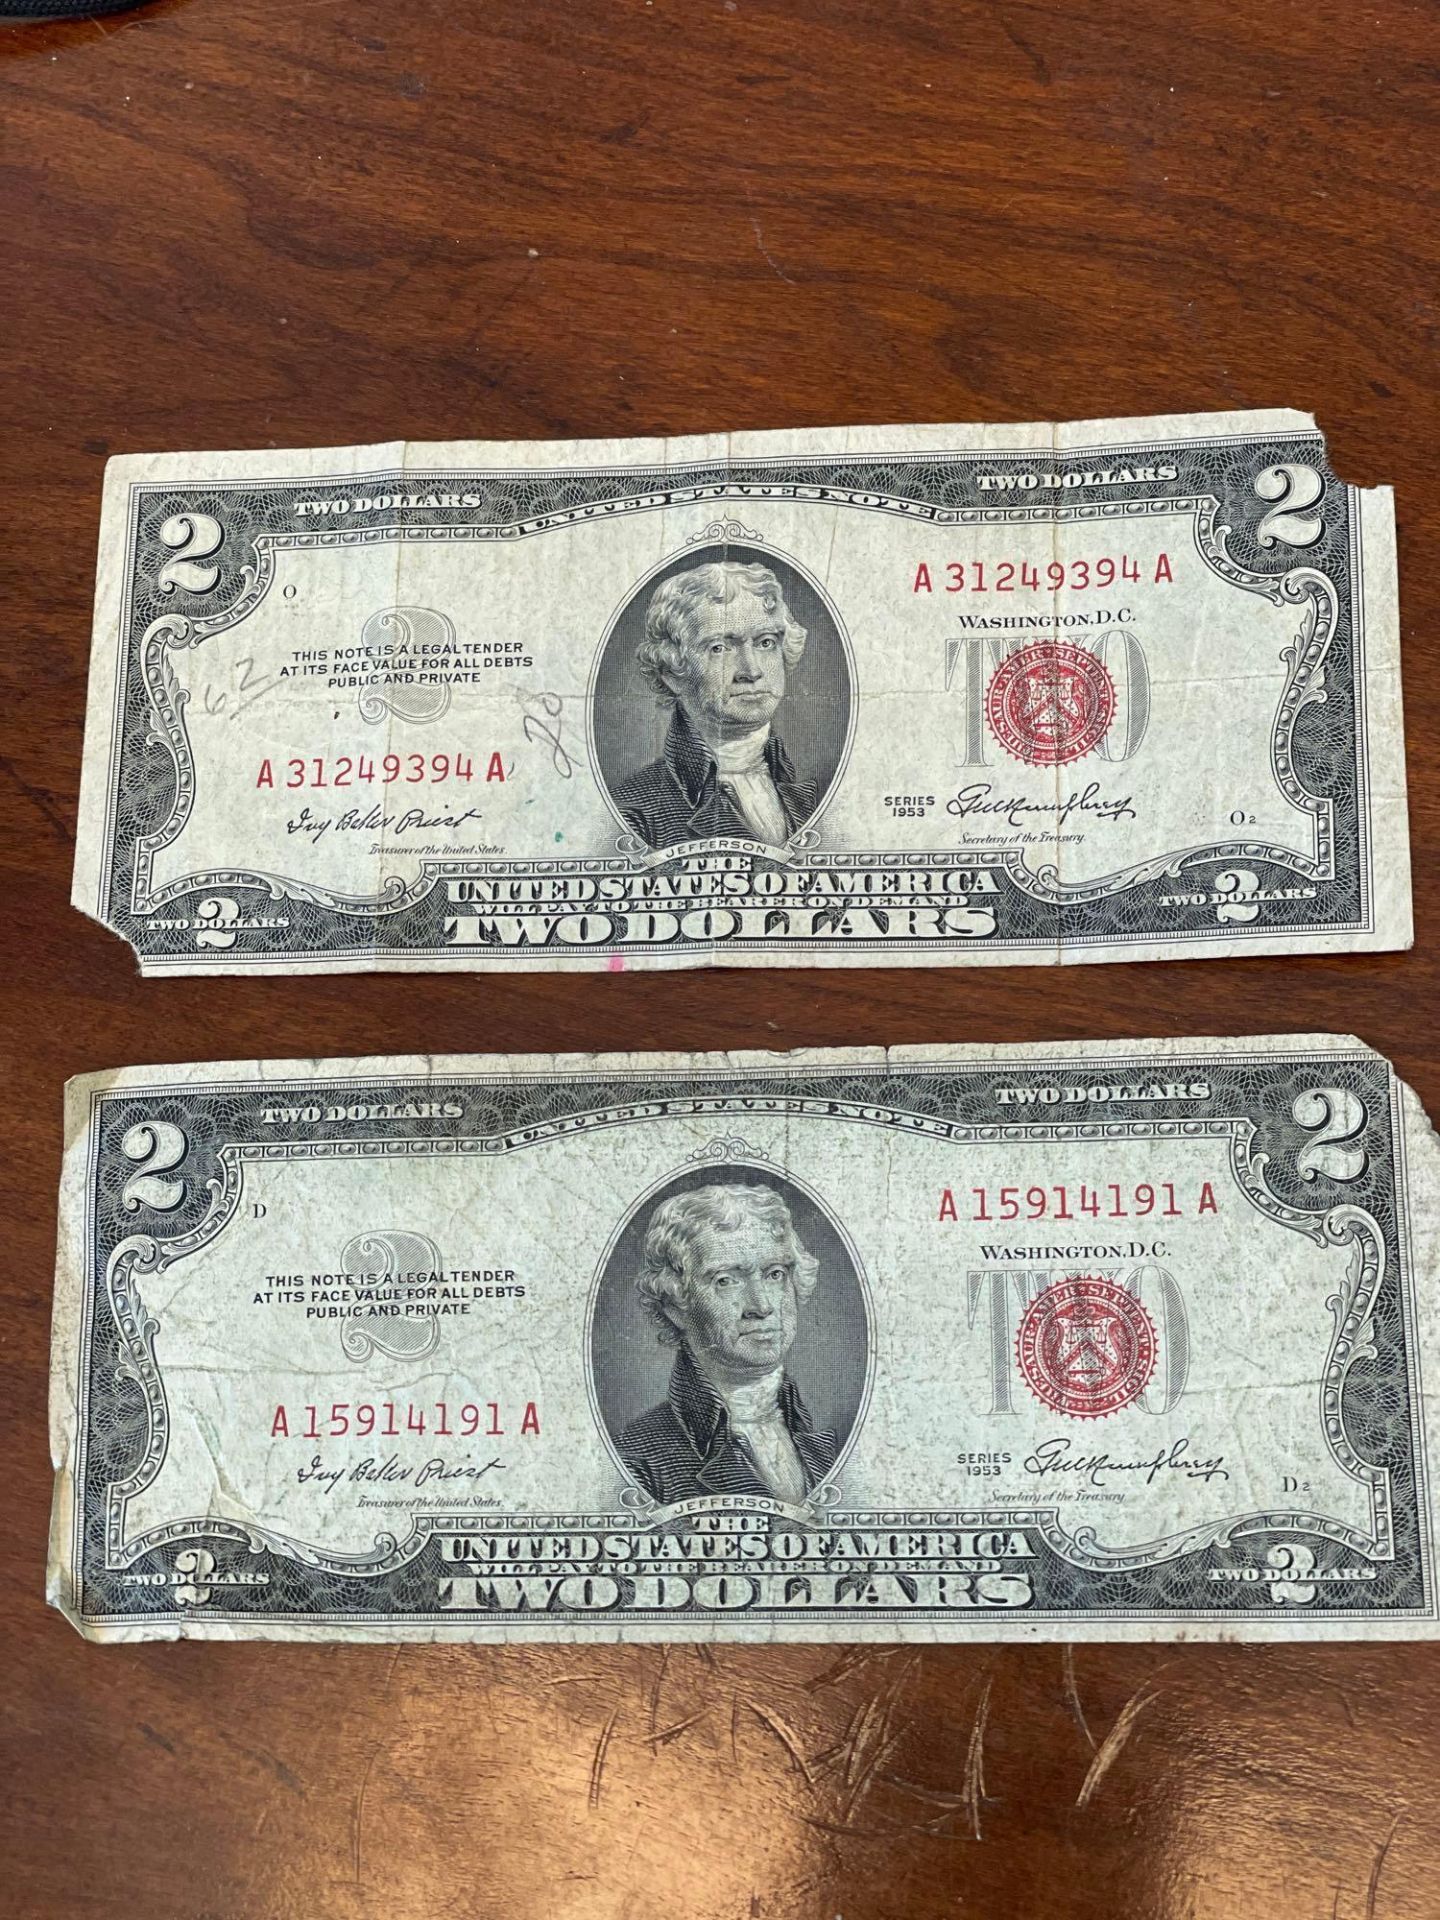 2 1953 Red Seal 2 Dollar Bills - Image 2 of 3